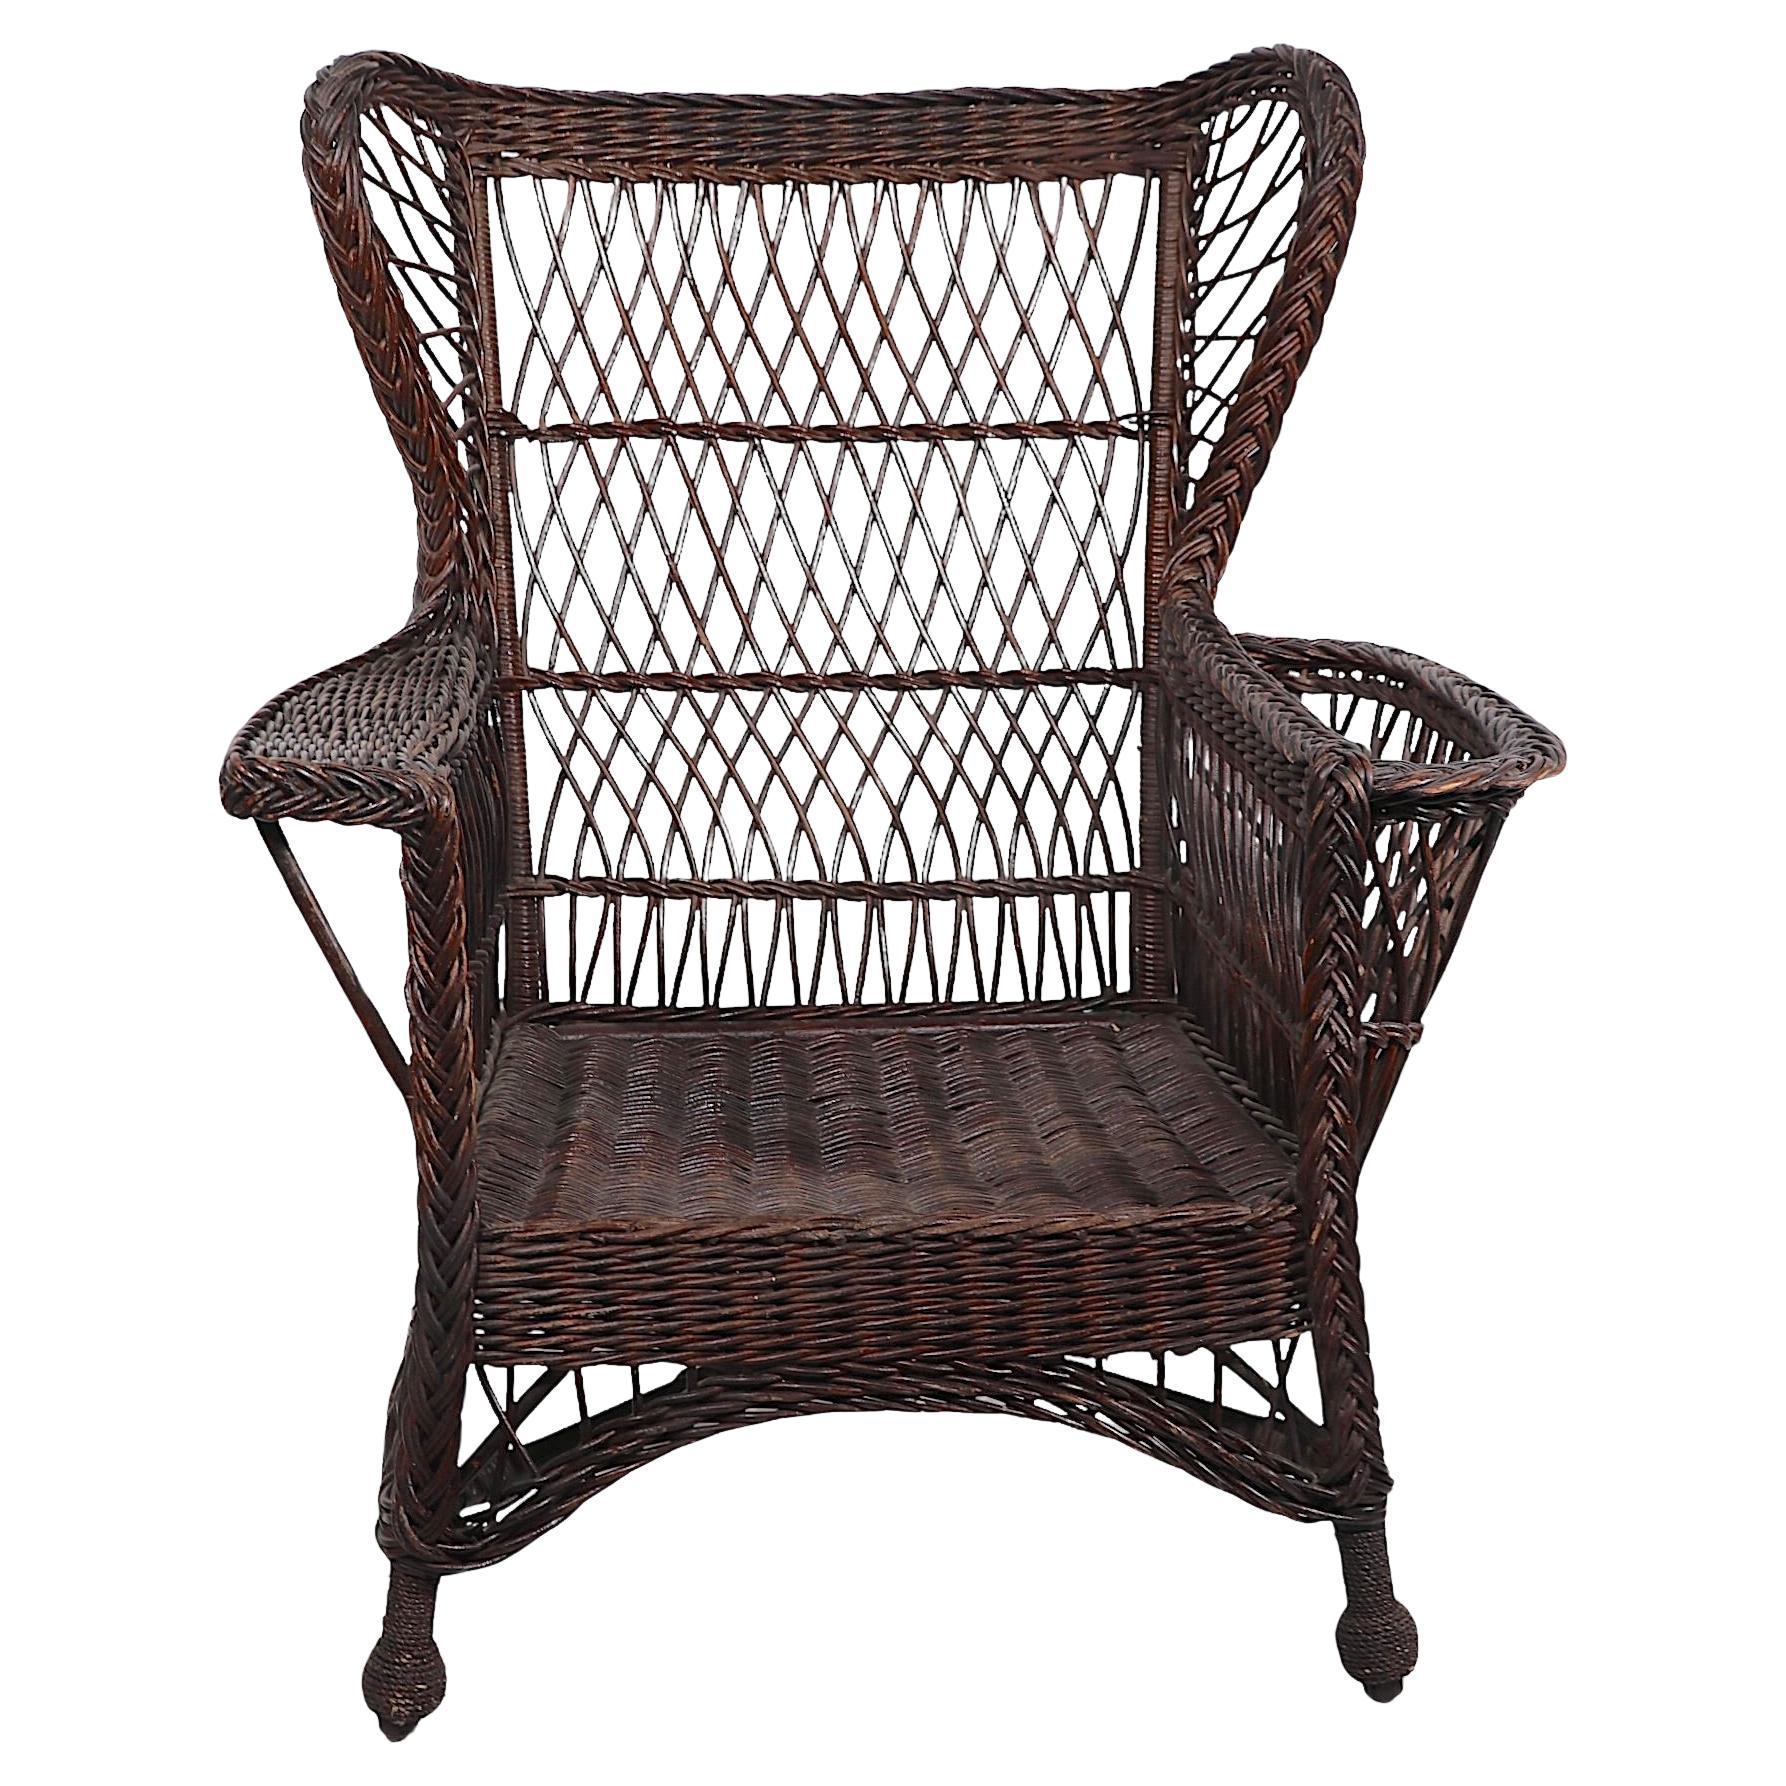 Victorian Bar Harbor Wicker Wing Chair mit Magazin Rack Arm